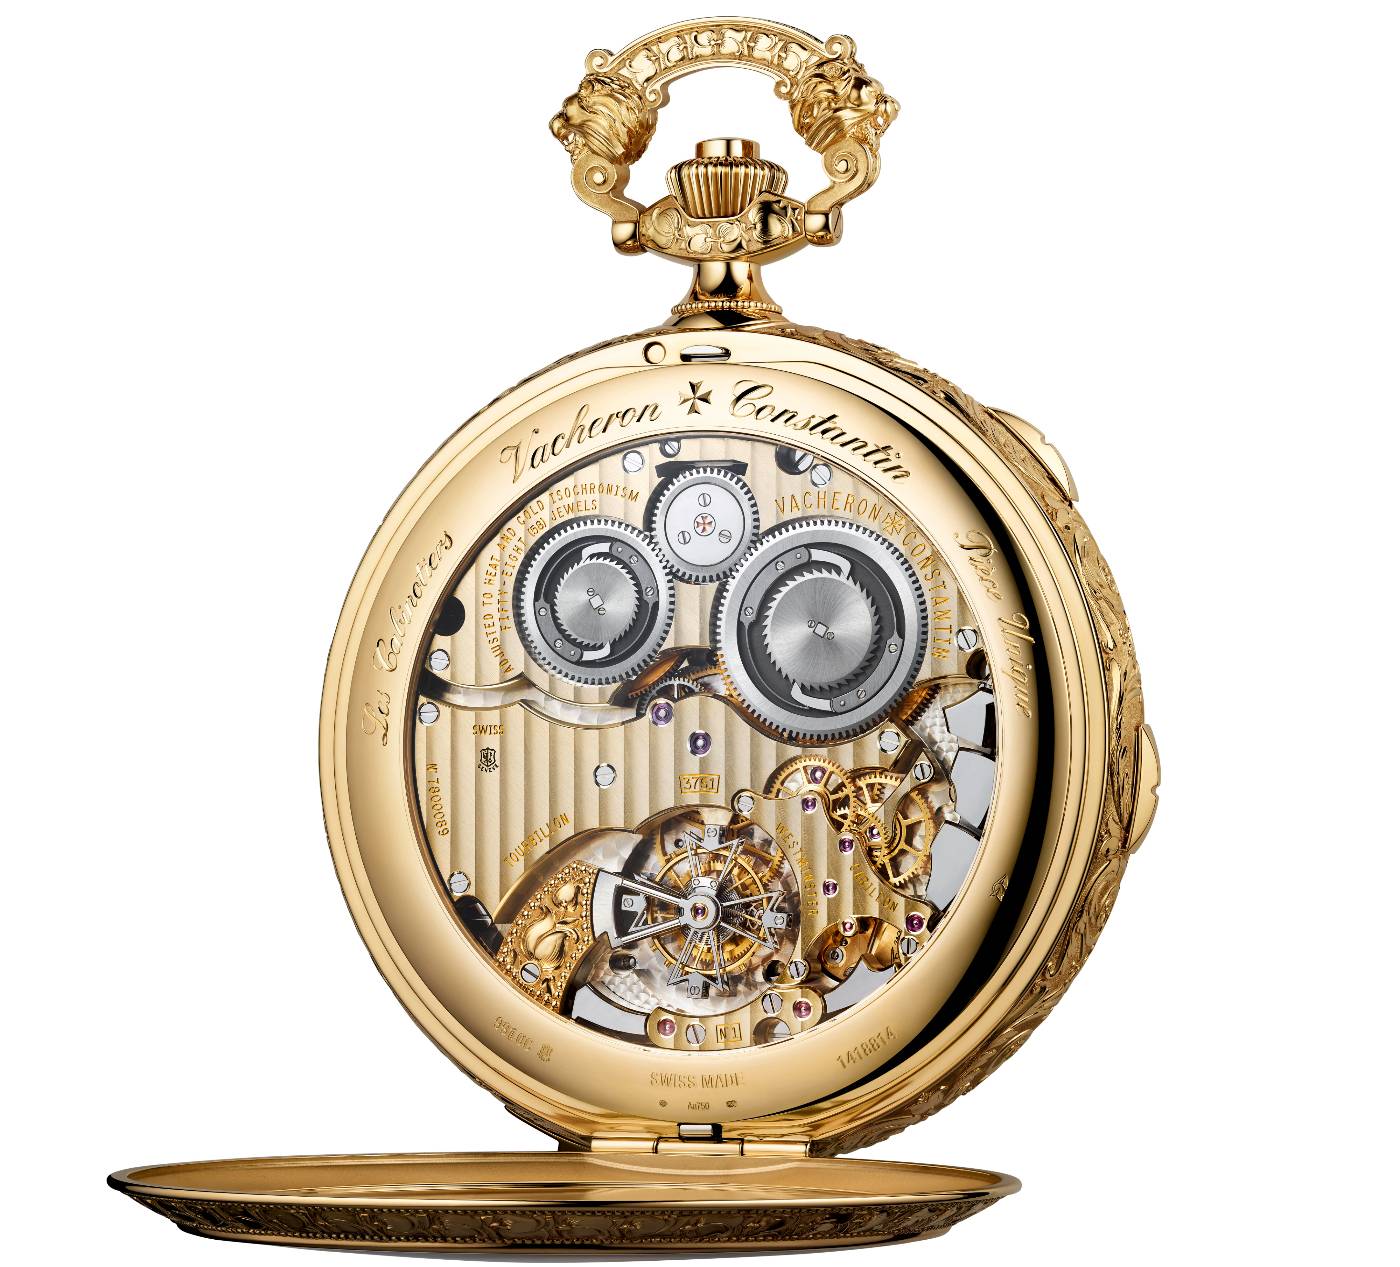 Vacheron Constantin presenta un excepcional reloj de bolsillo a medida